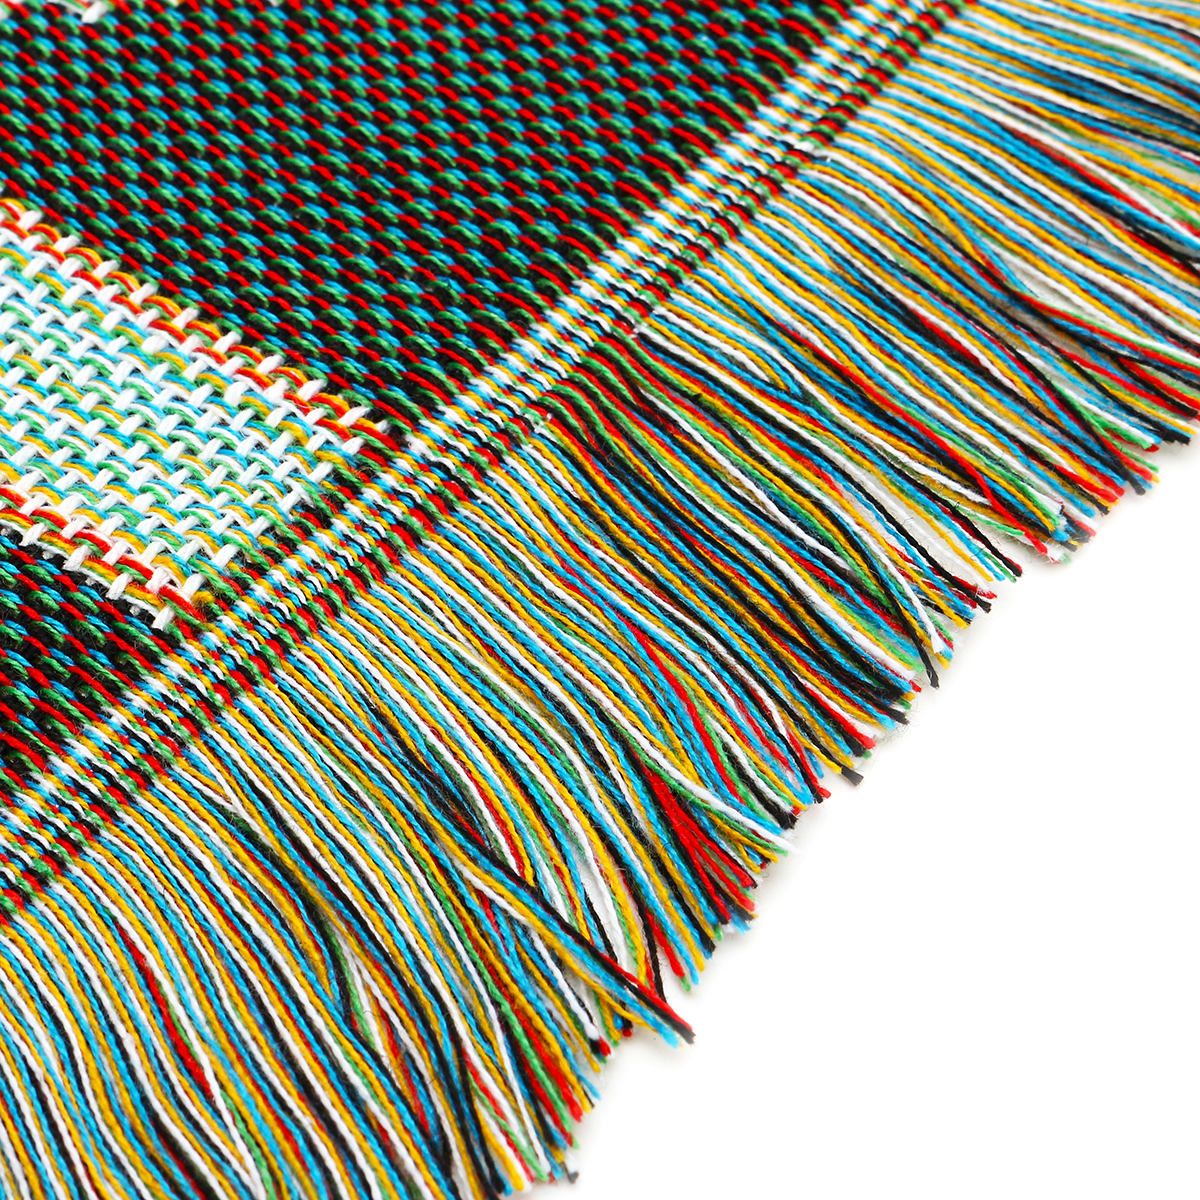 Retro-Navajo-American-Style-Geometric-Popcap-Upholstery-Leisure-Carpet-Air-Conditioning-Sofa-Blanket-1634170-10